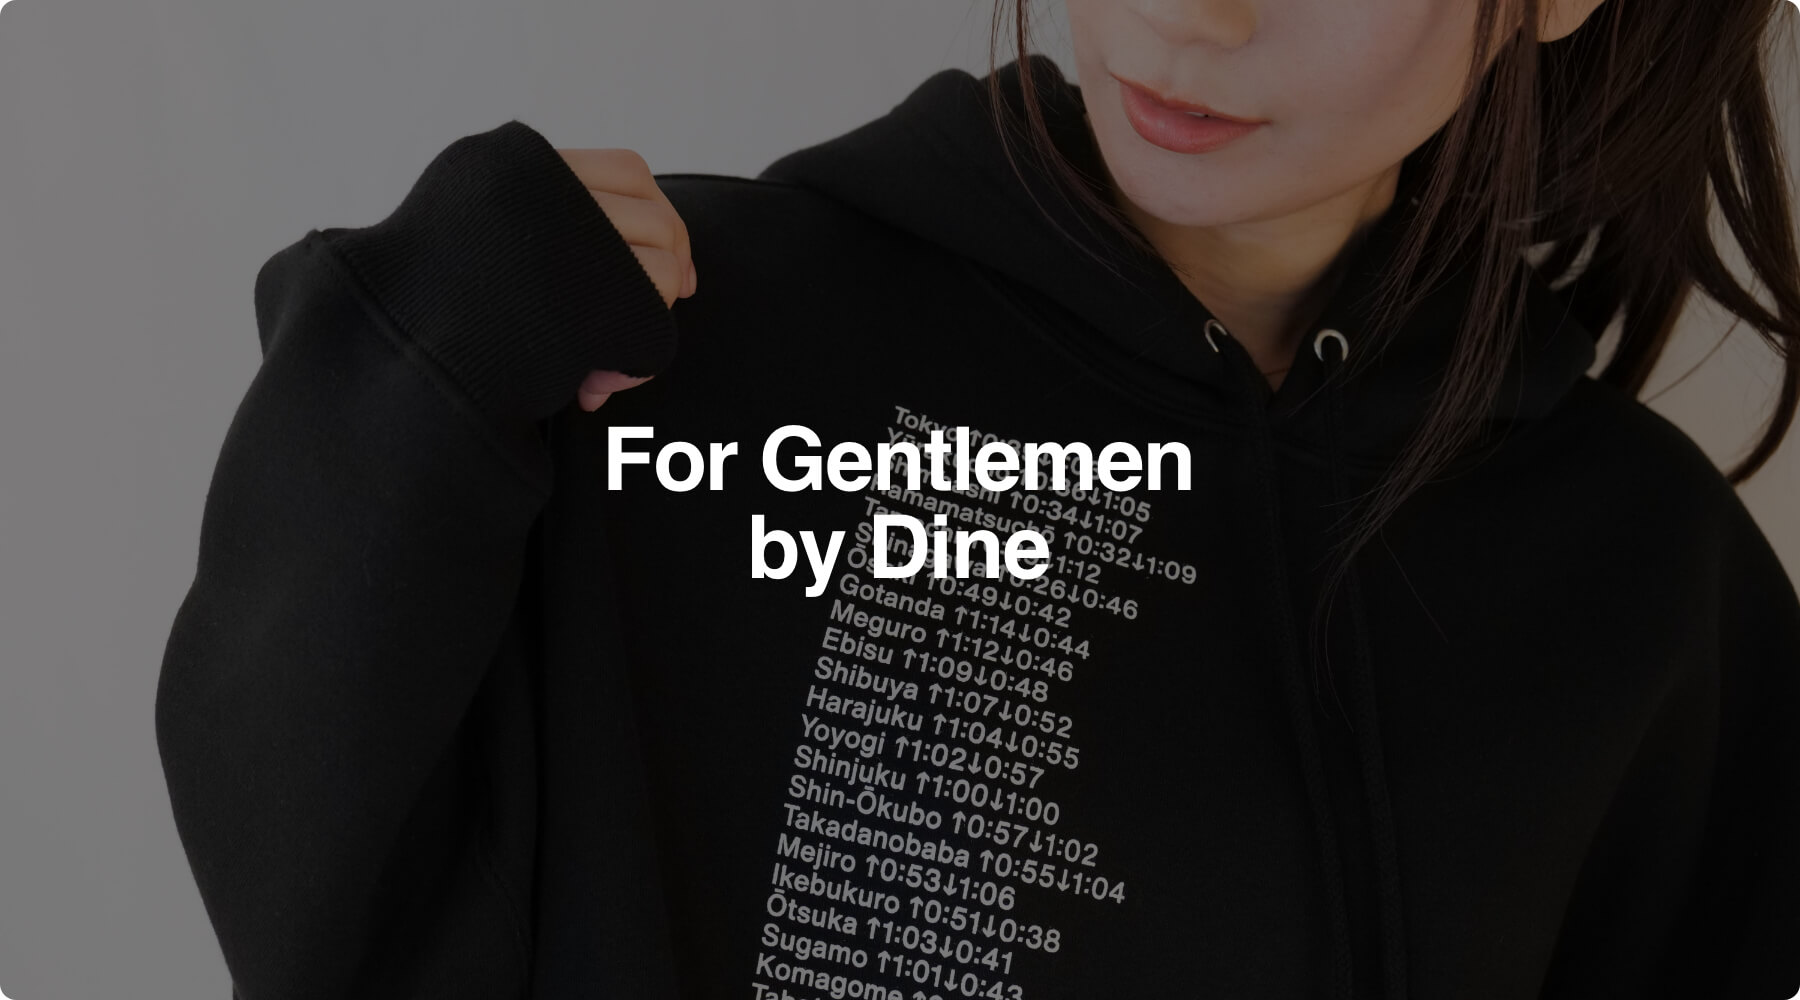 For Gentlemen
                        by dine